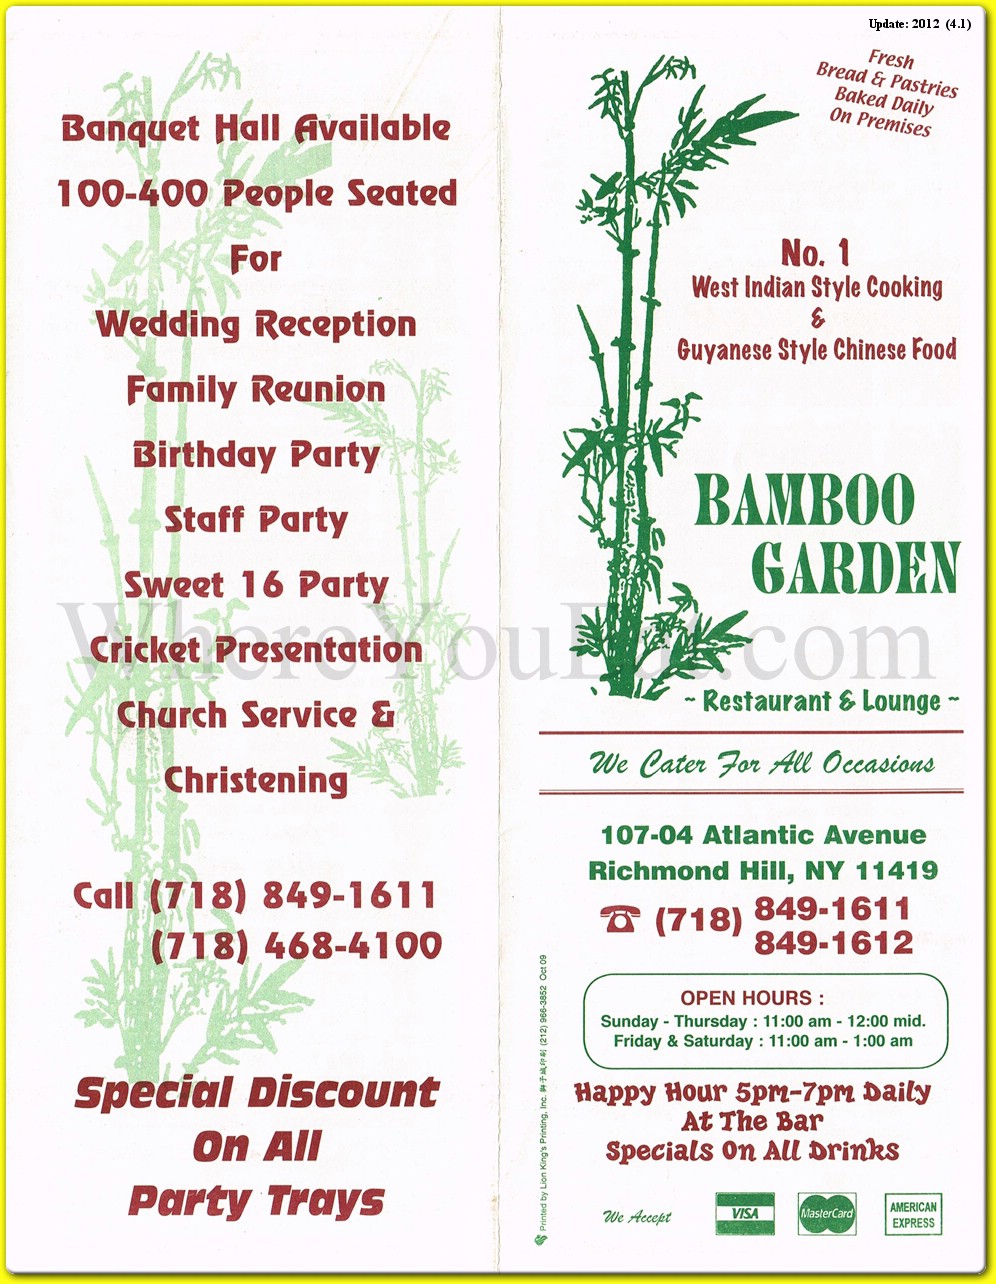 Bamboo garden restaurant